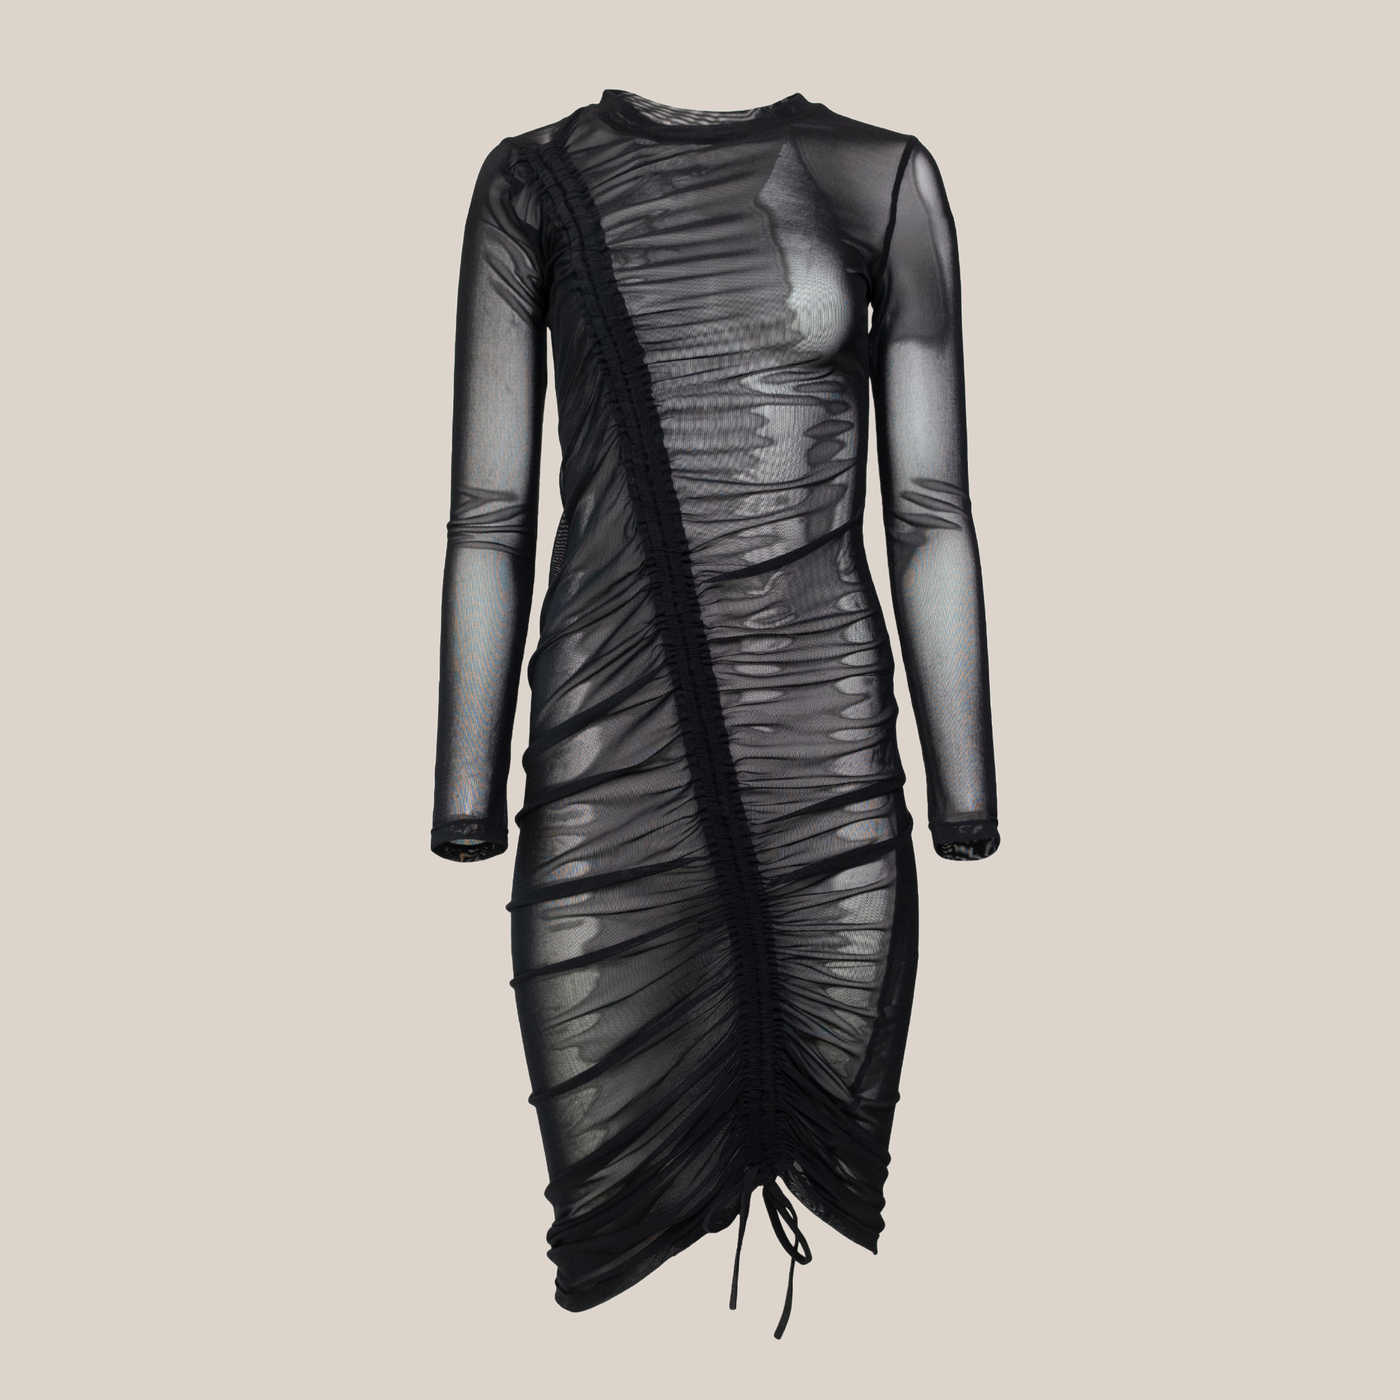 Gotstyle Fashion - Hilary MacMillan Dresses Long Sleeve Ruched Mesh Dress - Black